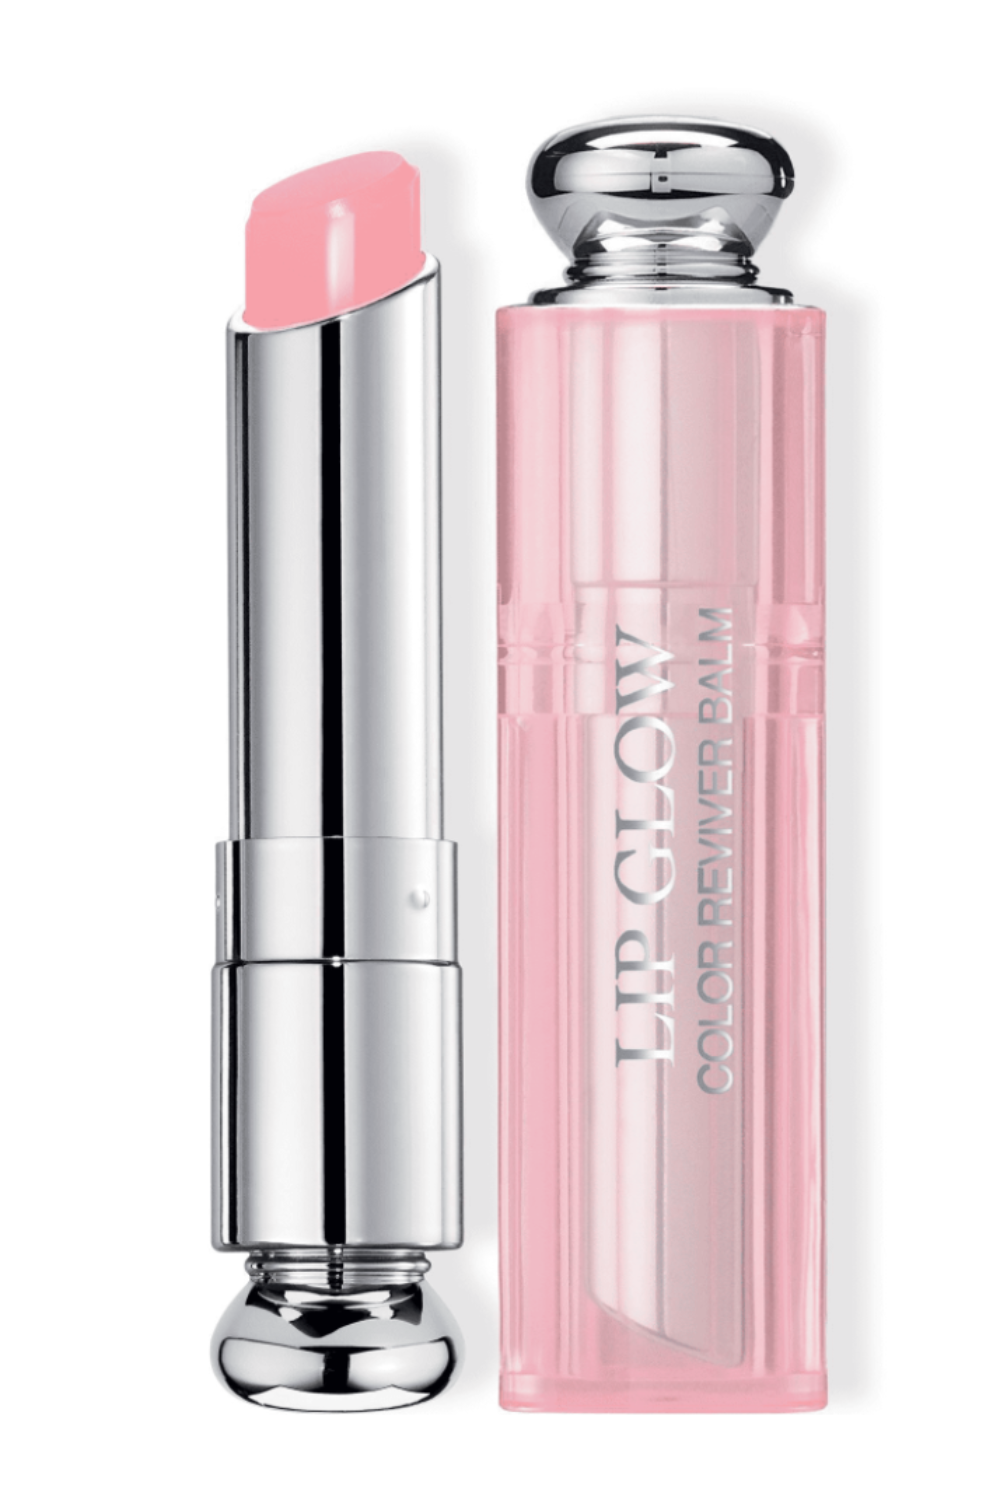 of Glow 001 Addict Beauty Best - DIOR Pink – Lip